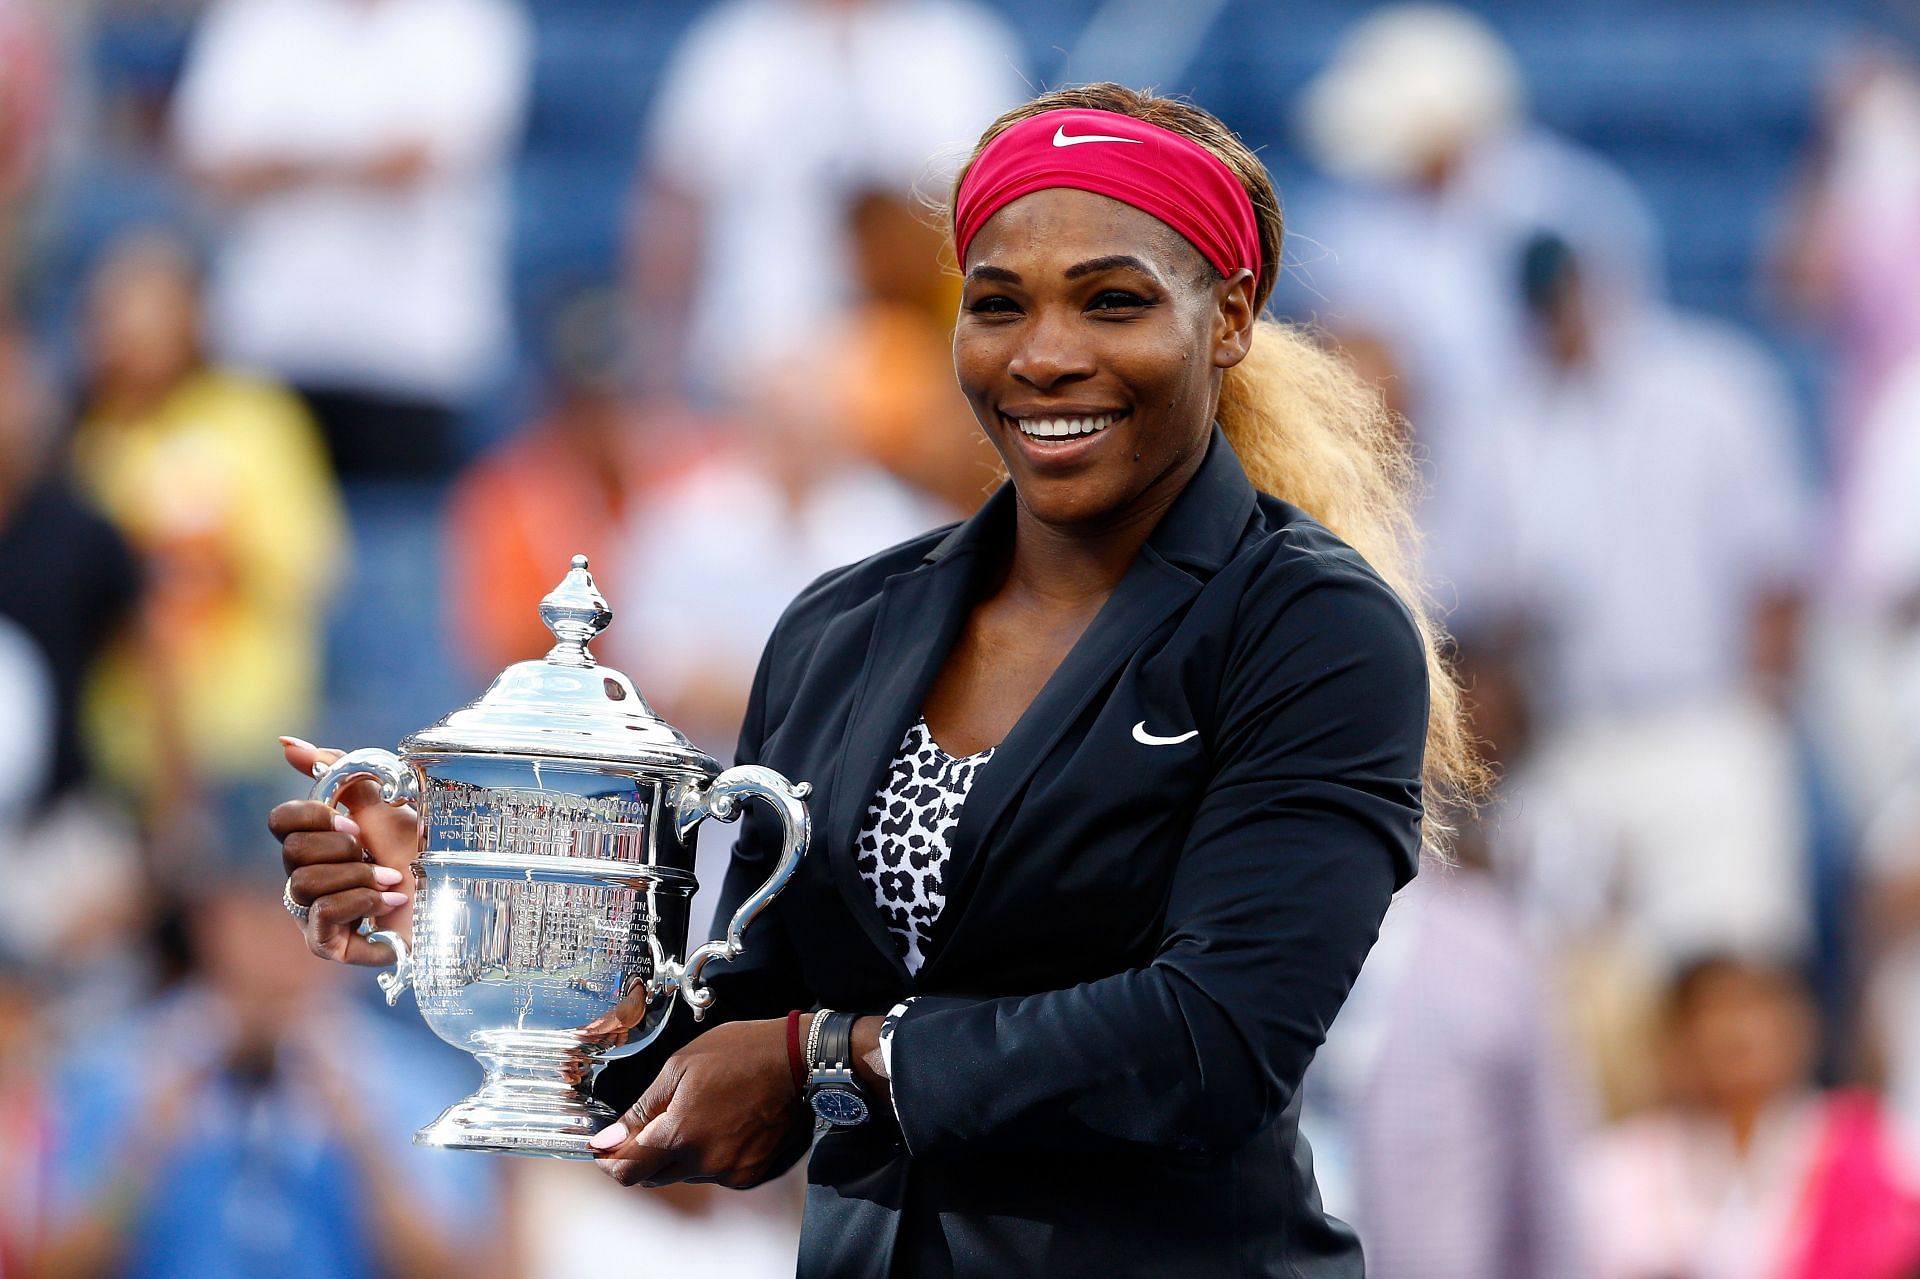 Serena Williams plays in Cincinnati and Toronto ahead of the US Open